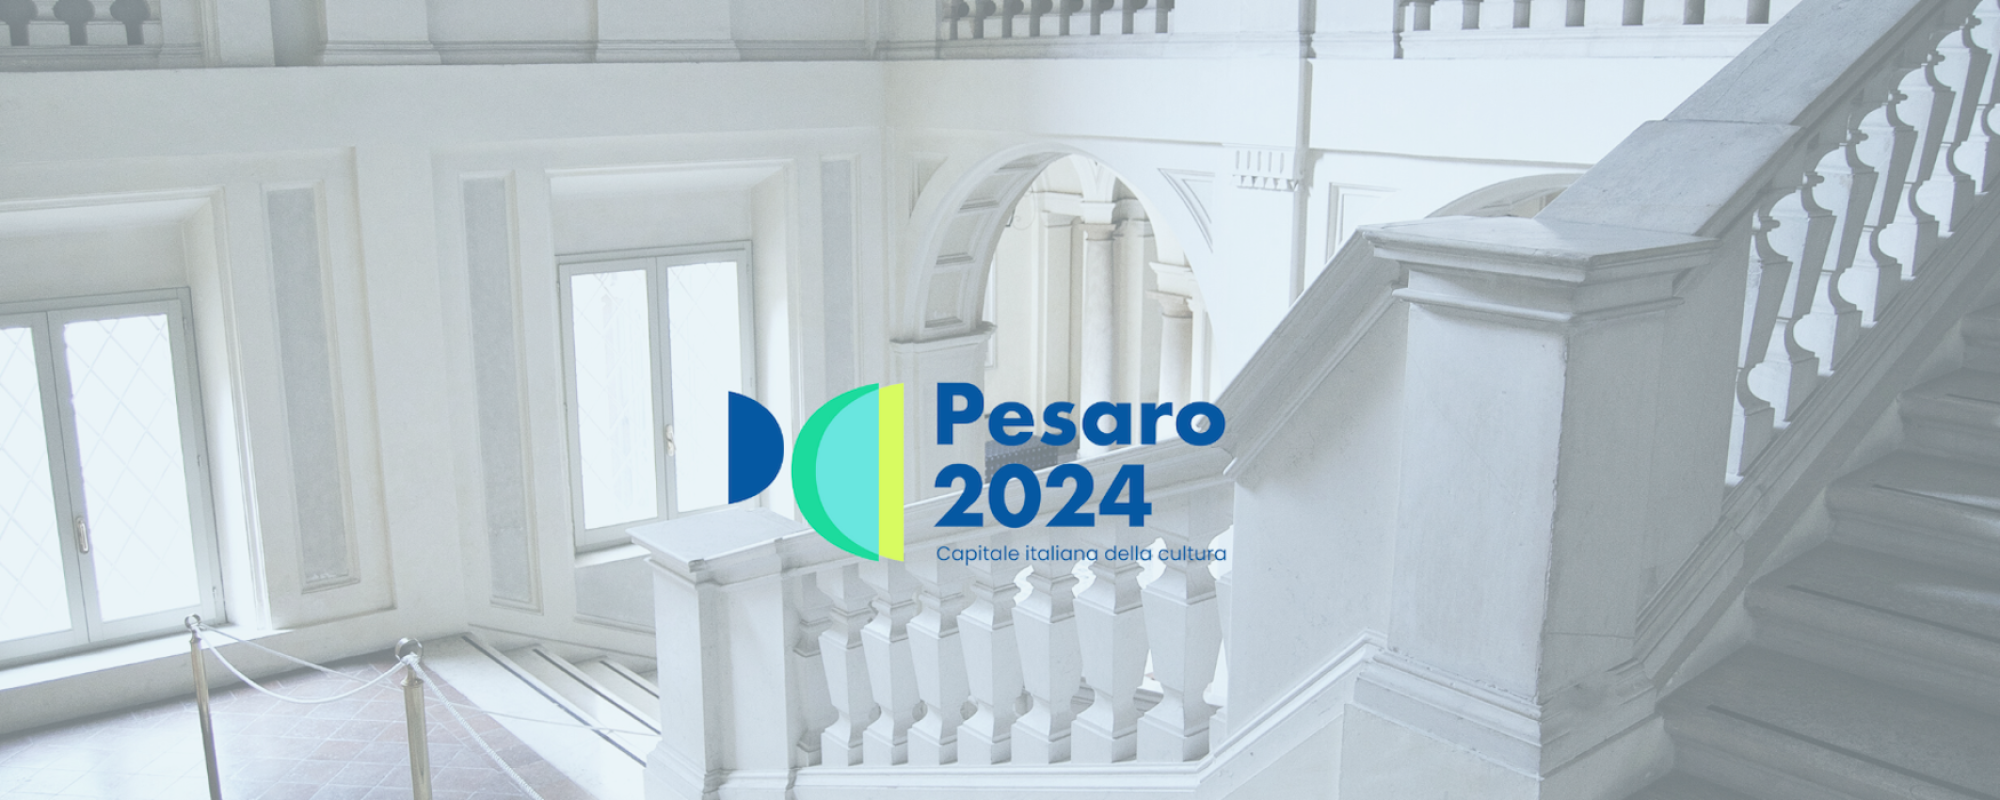 FCRP_PESARO 2024